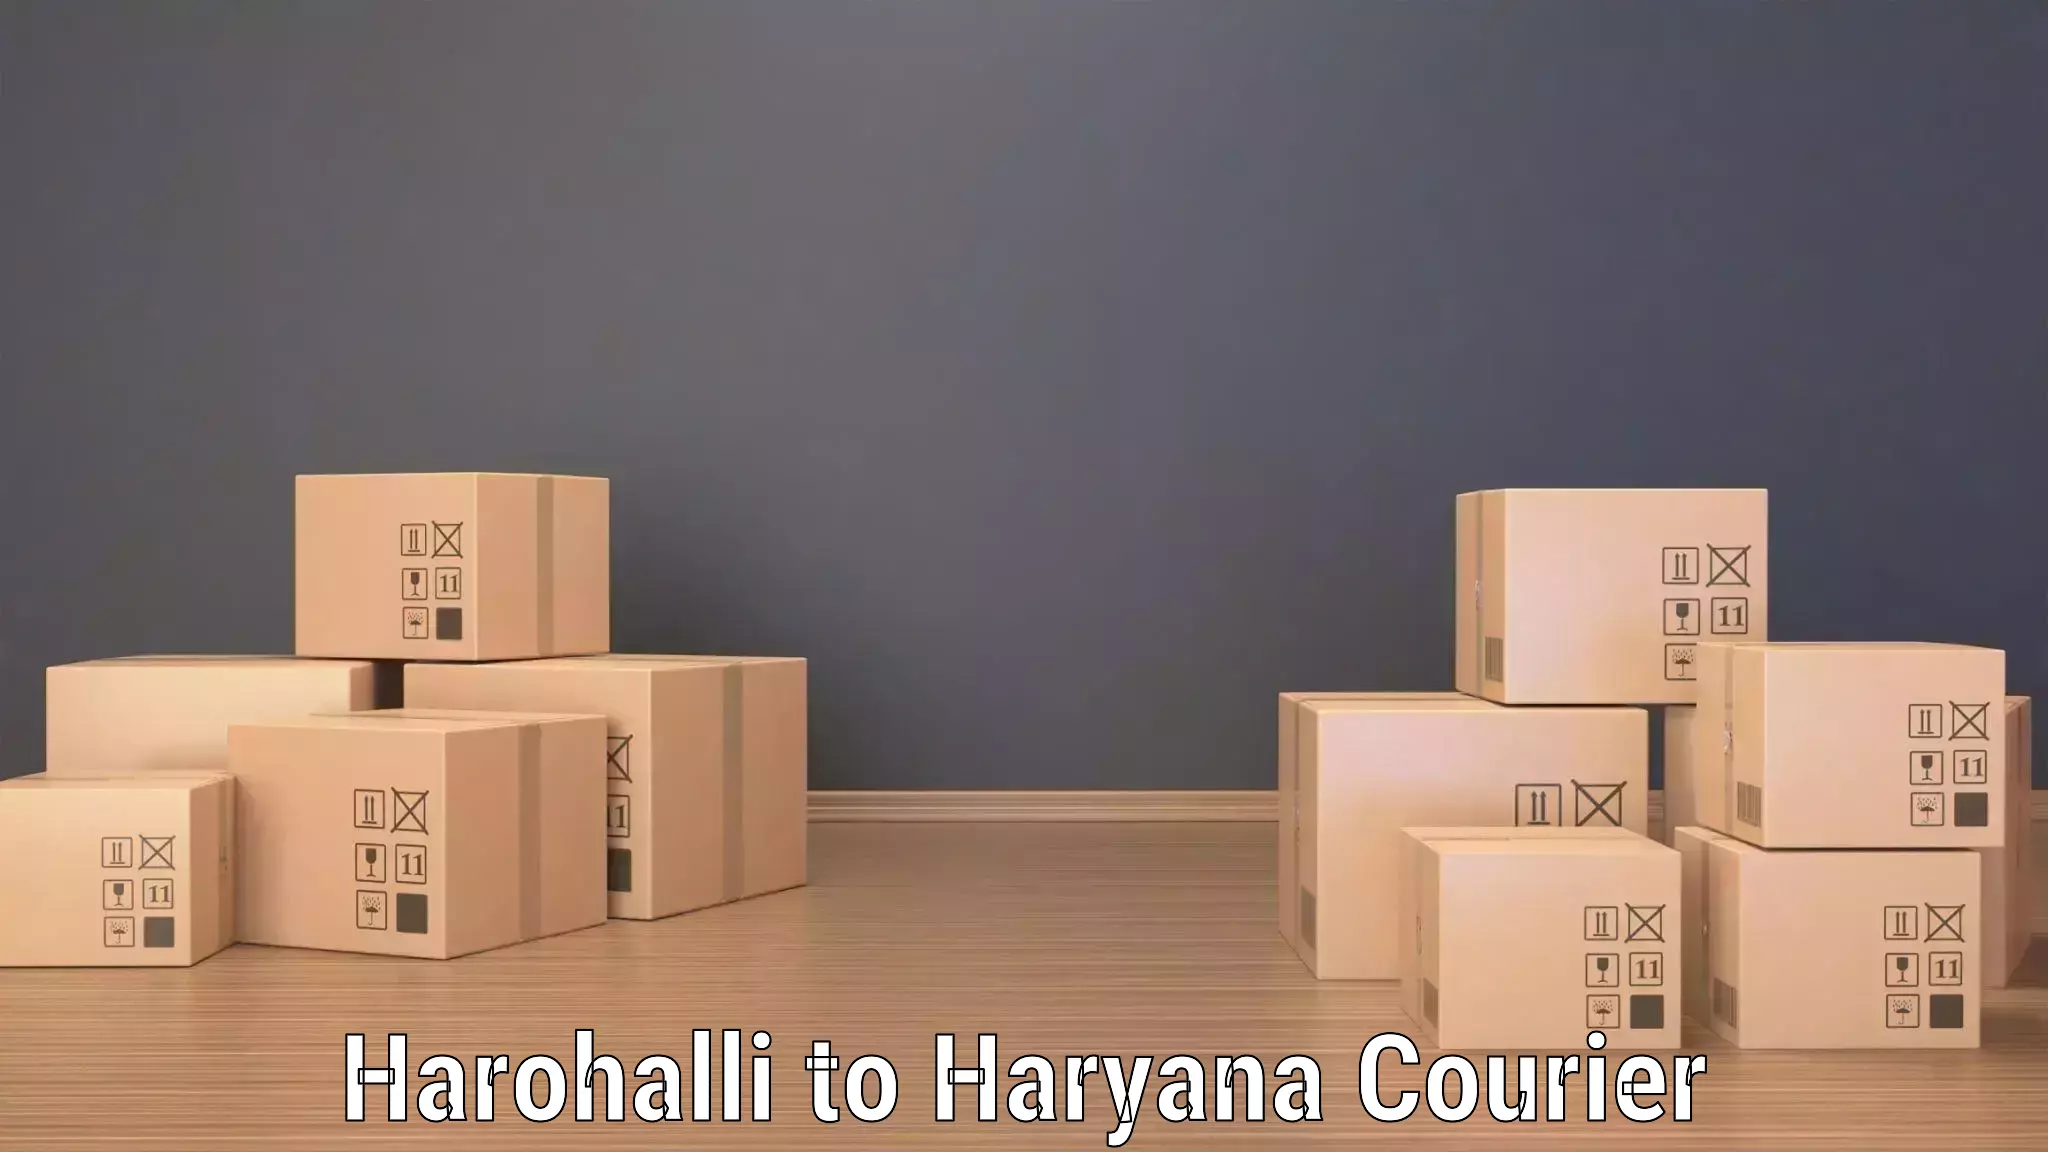 Professional courier handling Harohalli to Haryana